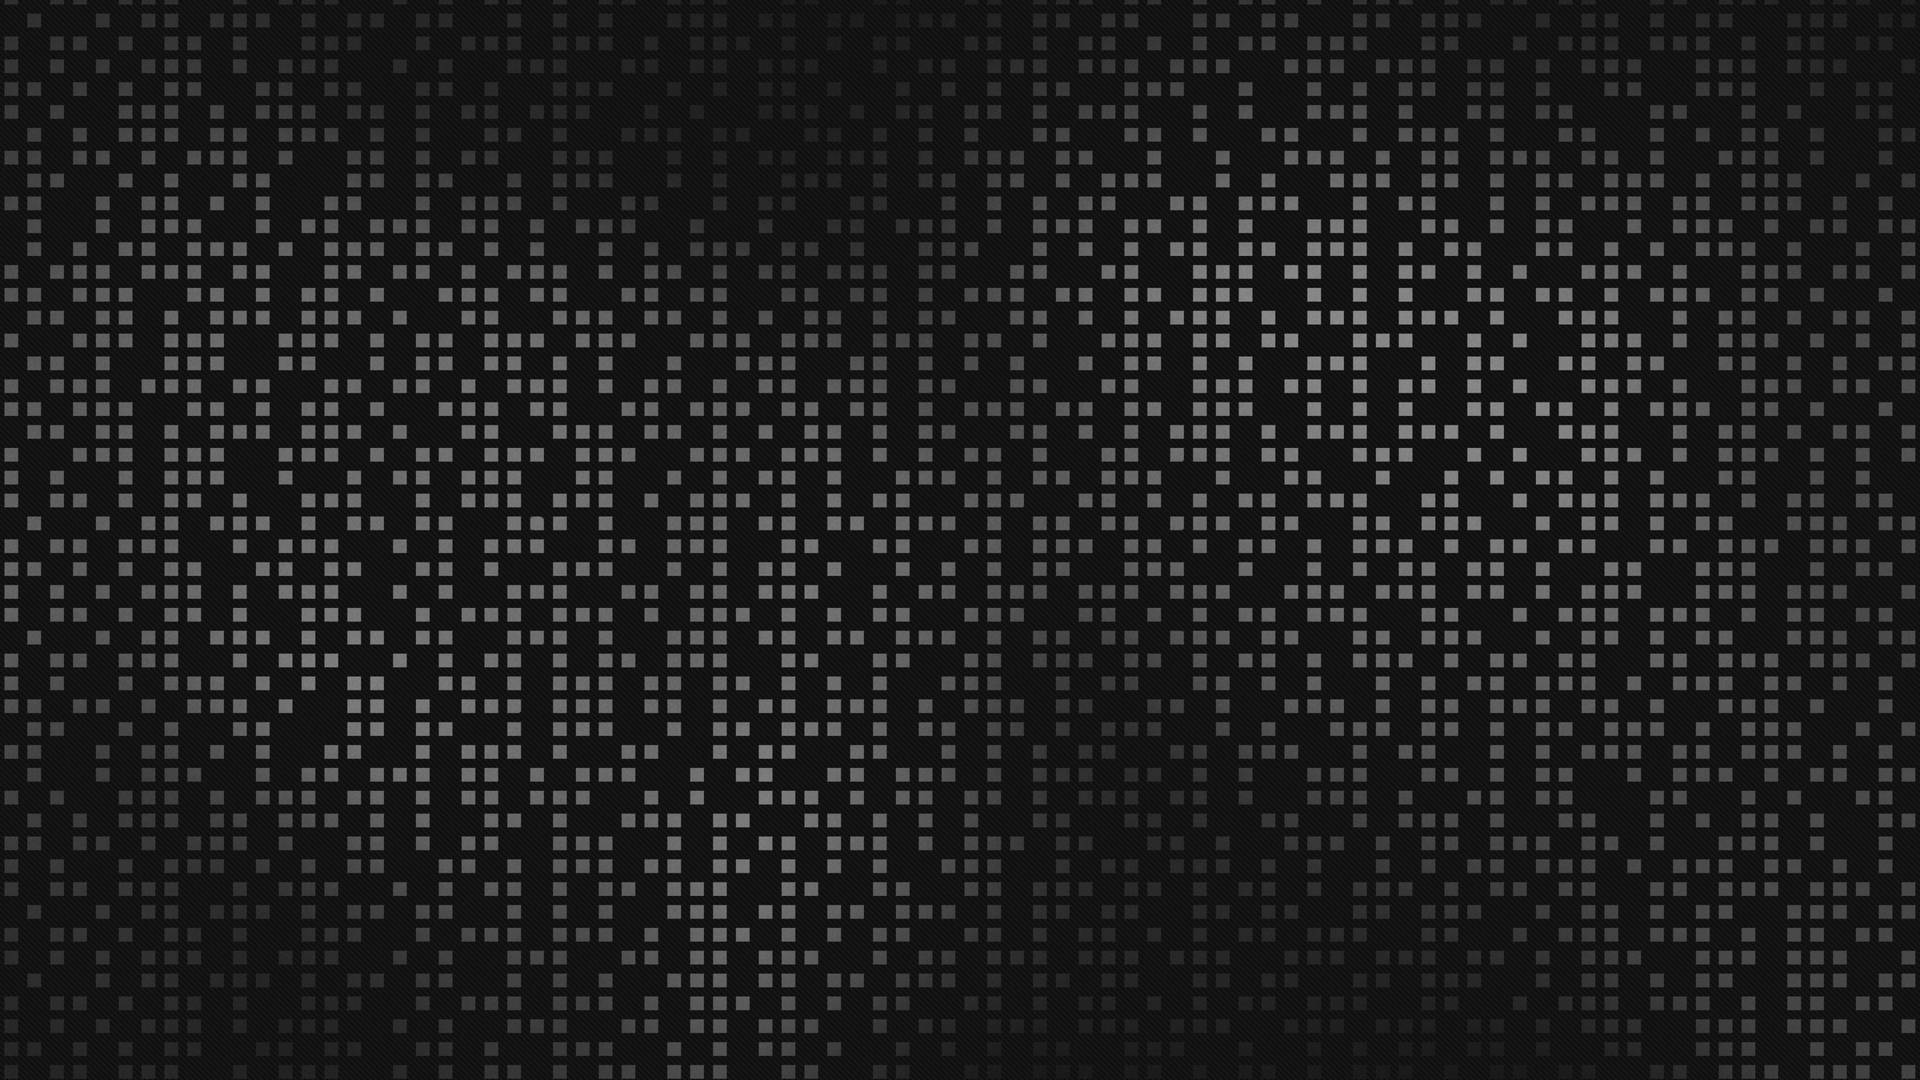 Exquisite Black Geometric Dots Design in 4K Ultra HD Wallpaper